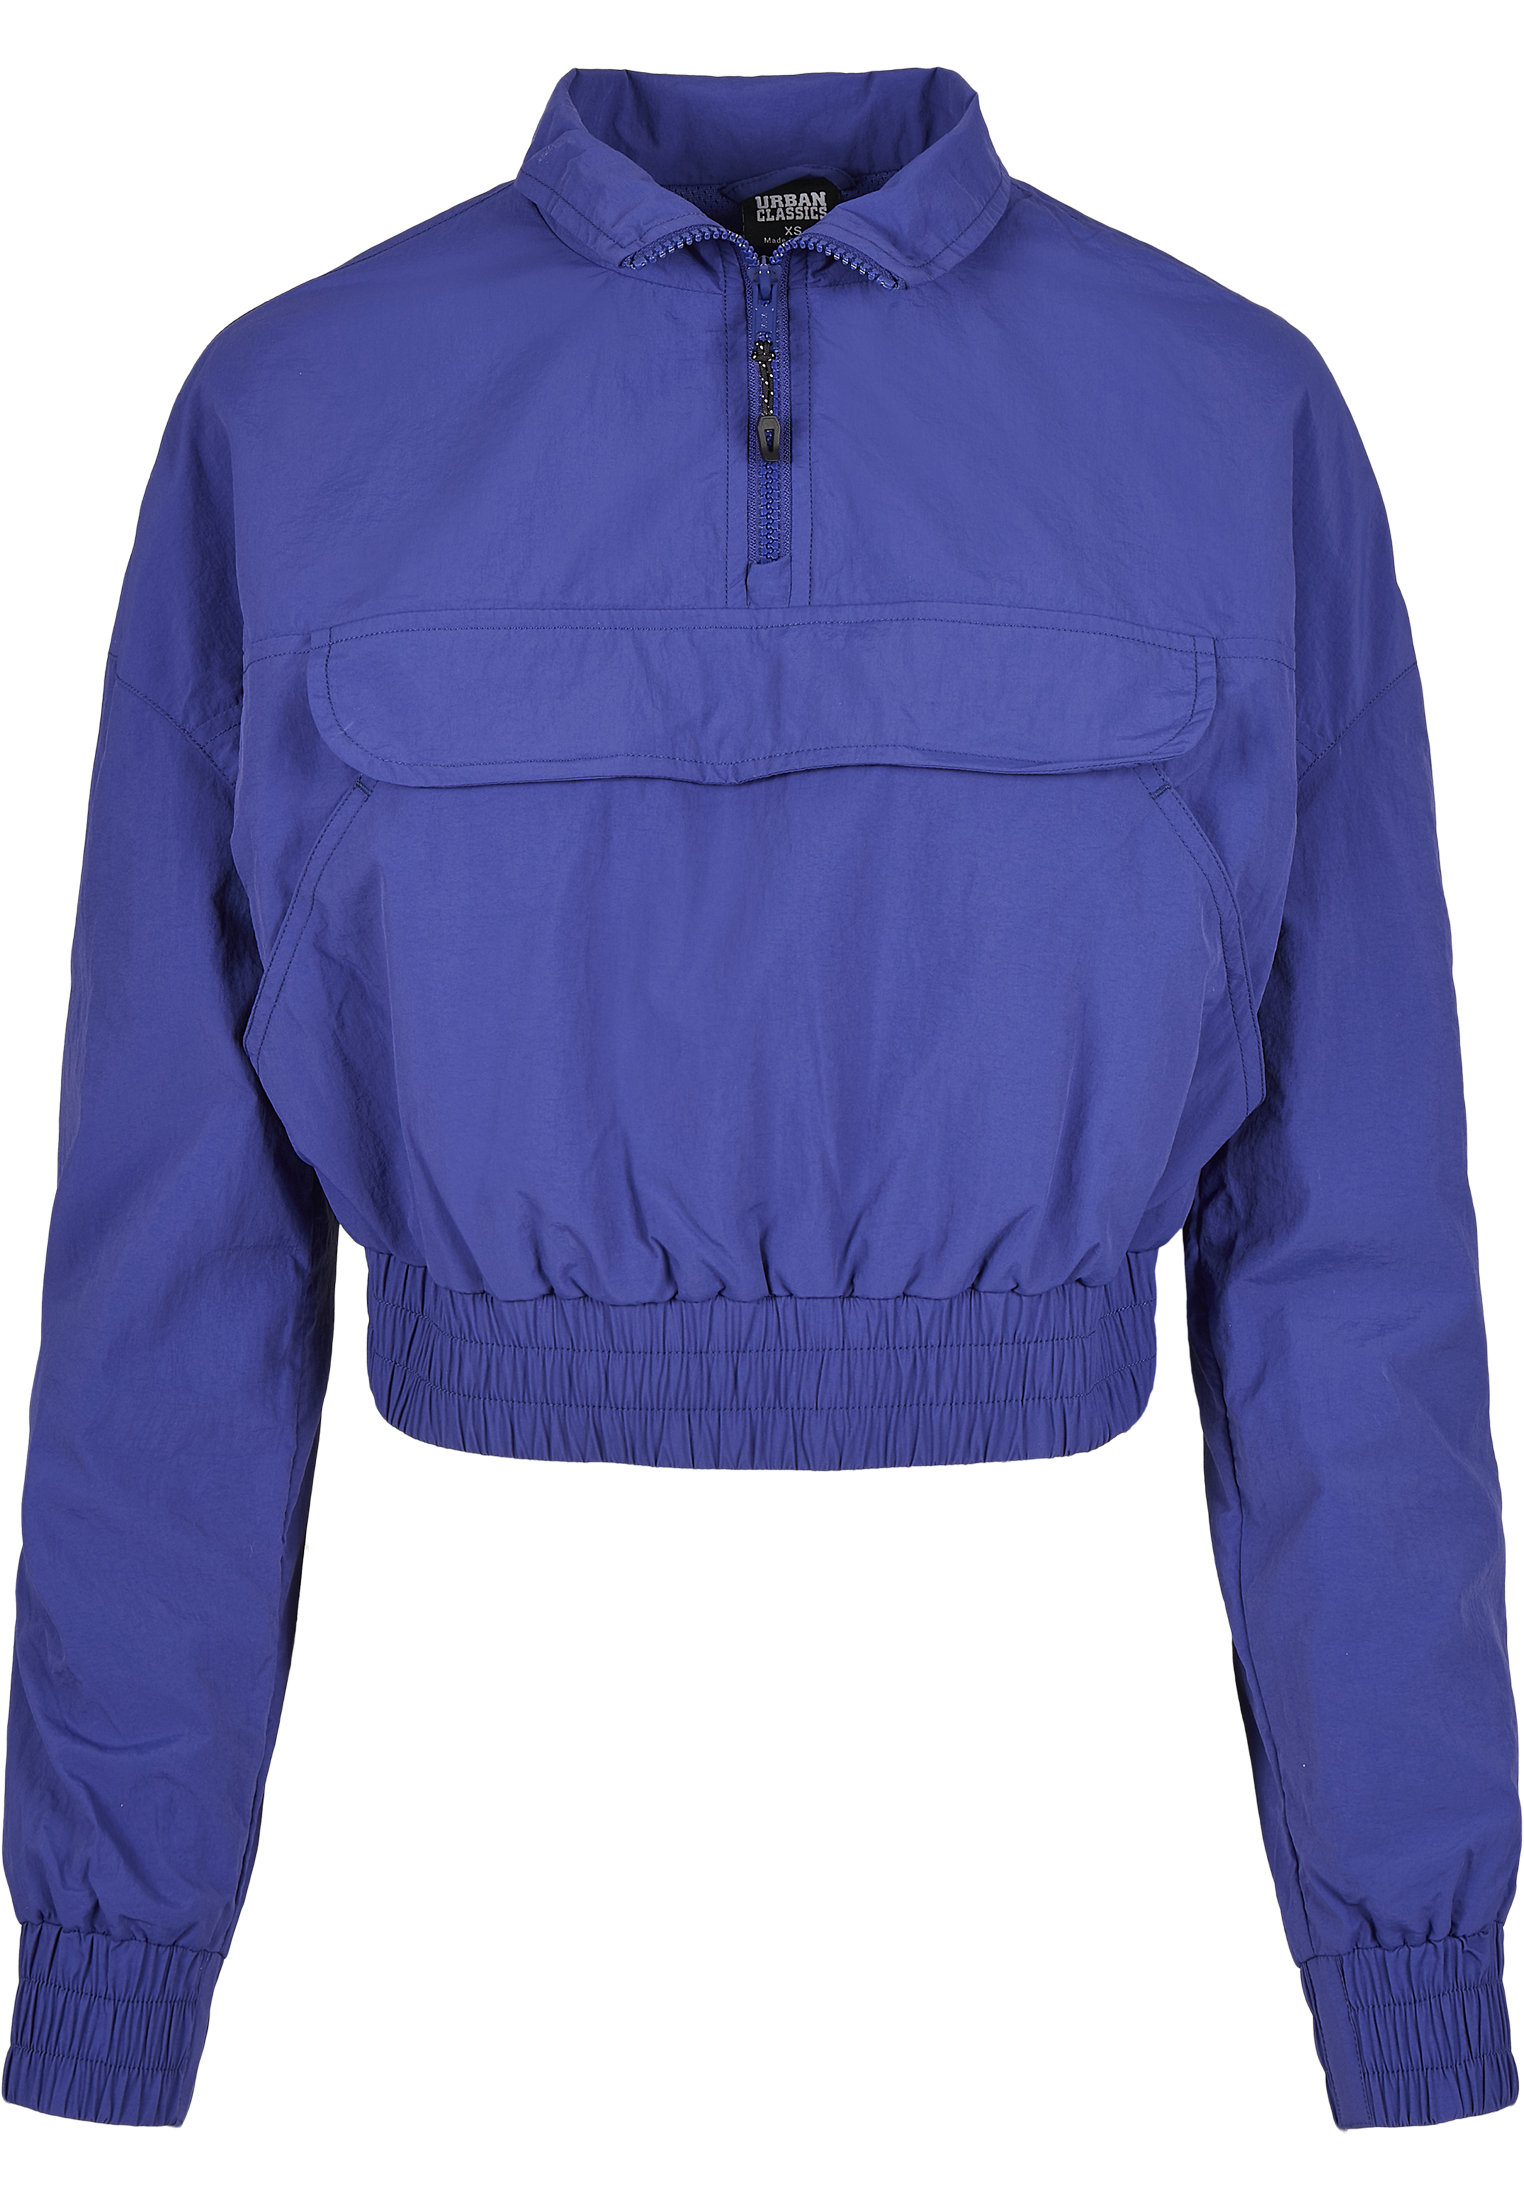 Curvy Ladies Cropped Crinkle Nylon Pull Over Jacket in Farbe bluepurple